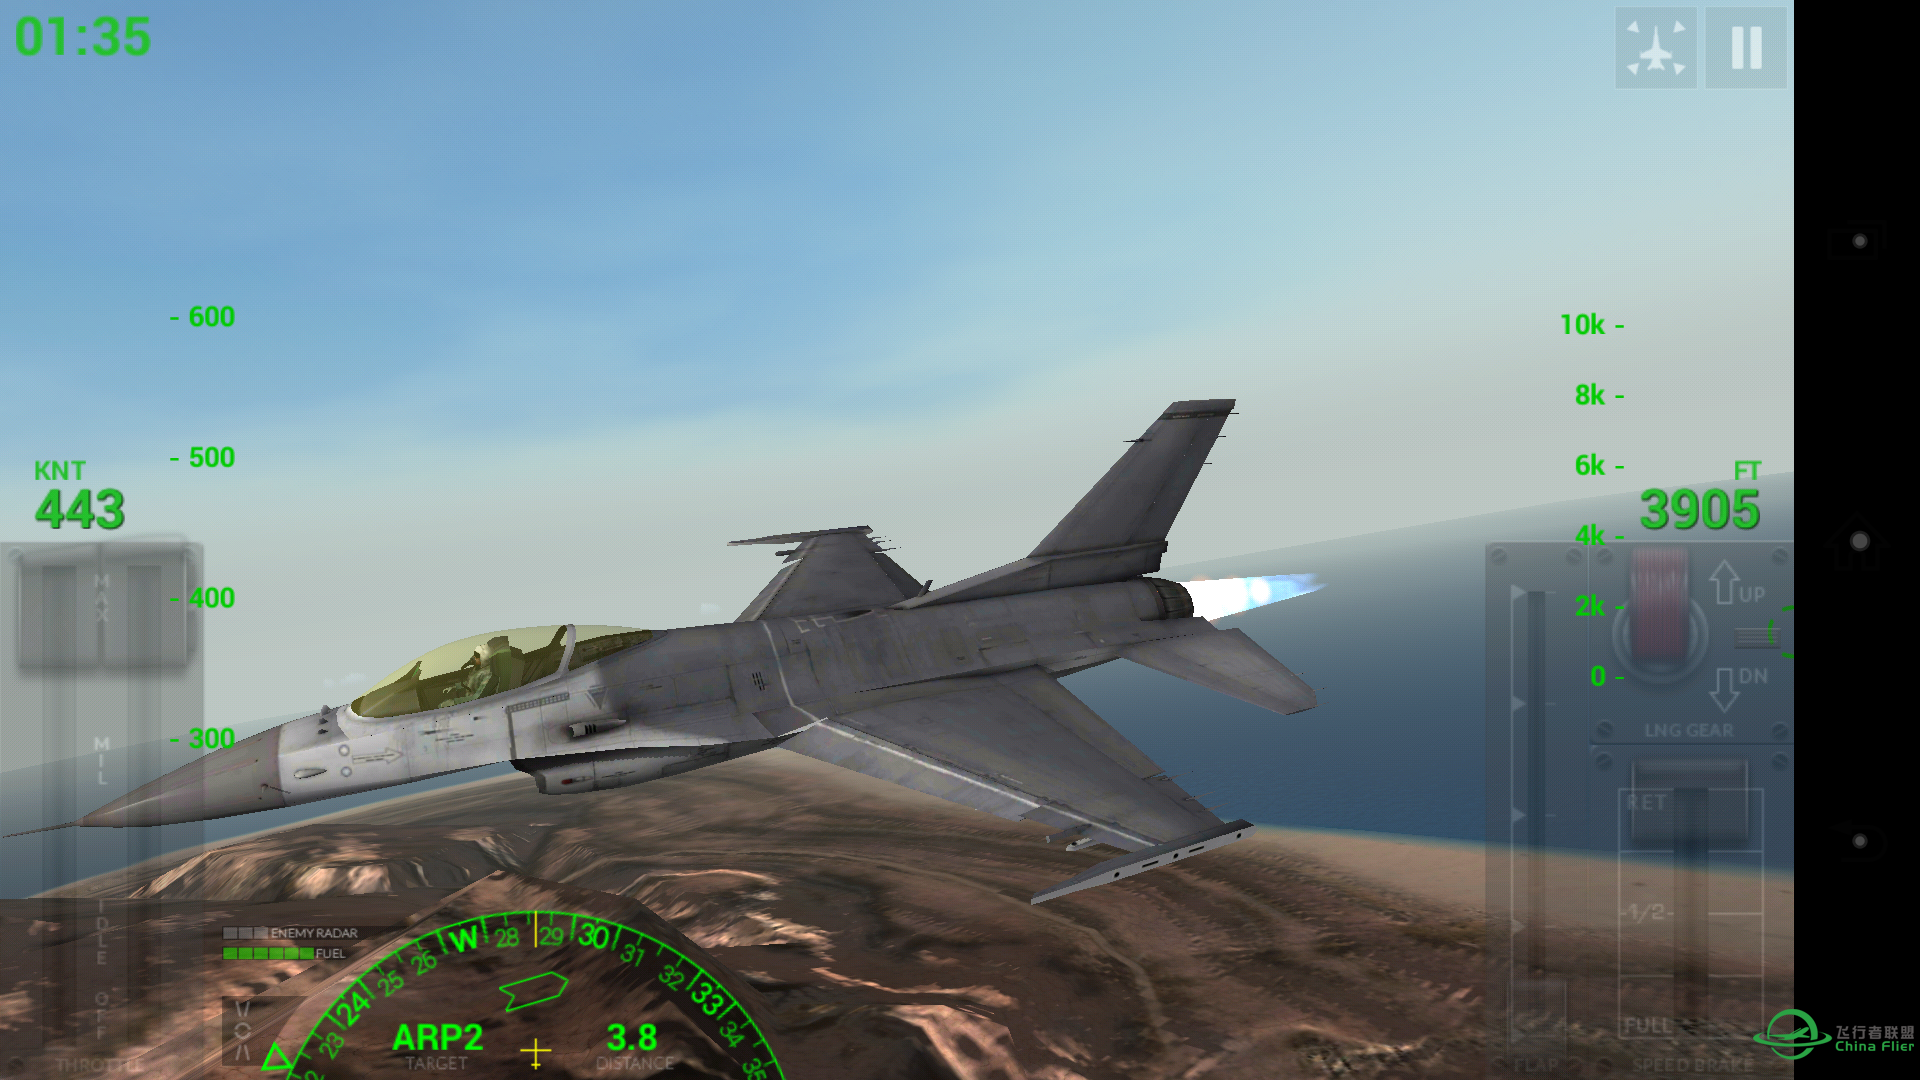 [截图而已]F18 Carrier Landing2 Pro-5350 